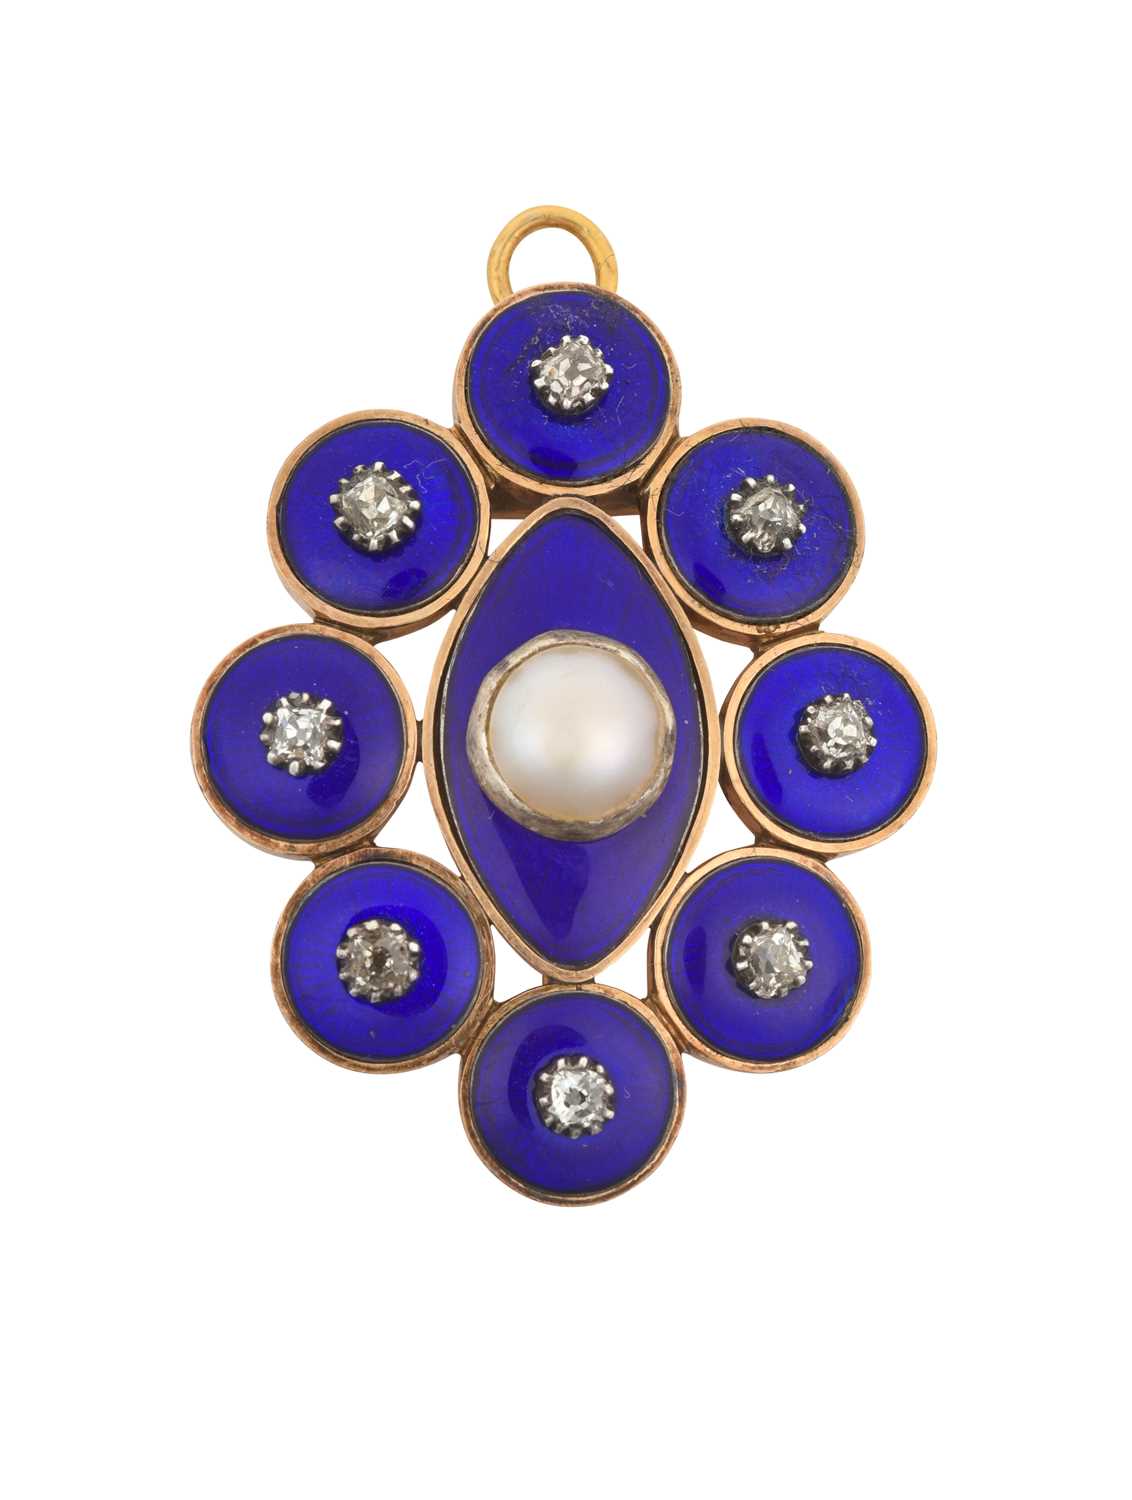 A Mid-Victorian Enamel, Split Pearl and Diamond Brooch/Pendant the blue enamel lozenge shaped plaque